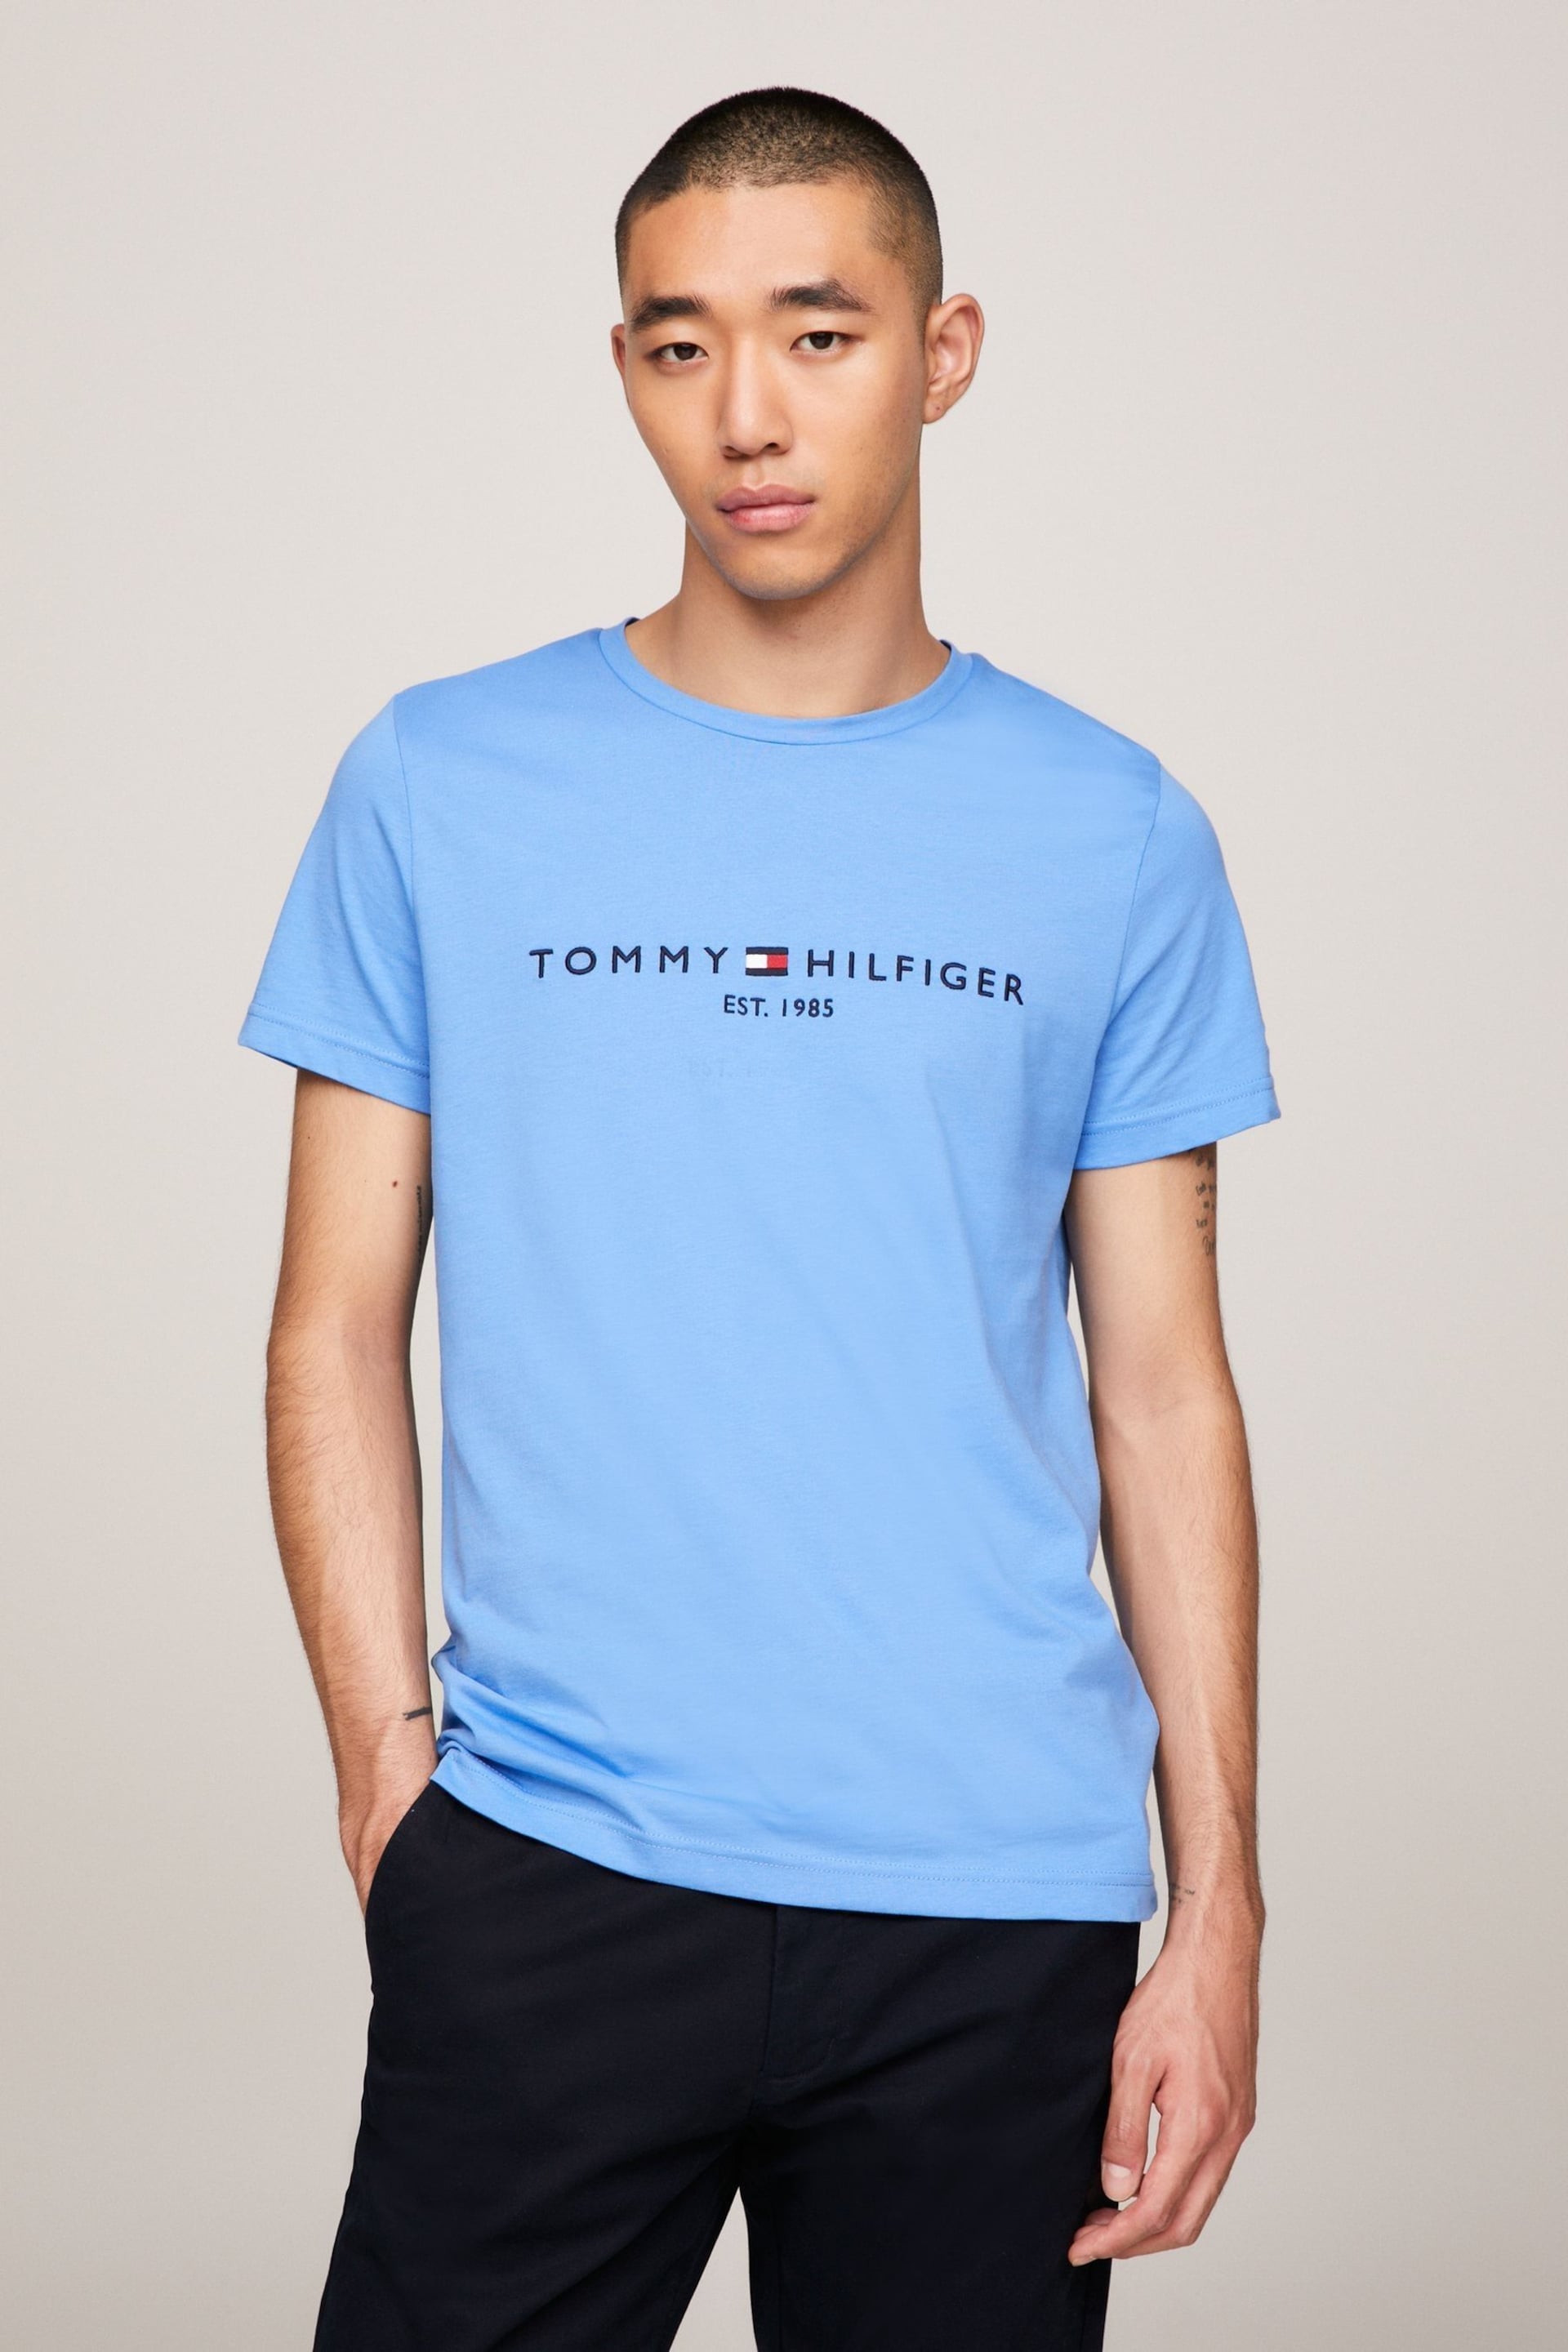 Tommy Hilfiger Bluye Logo T-Shirt - Image 1 of 5